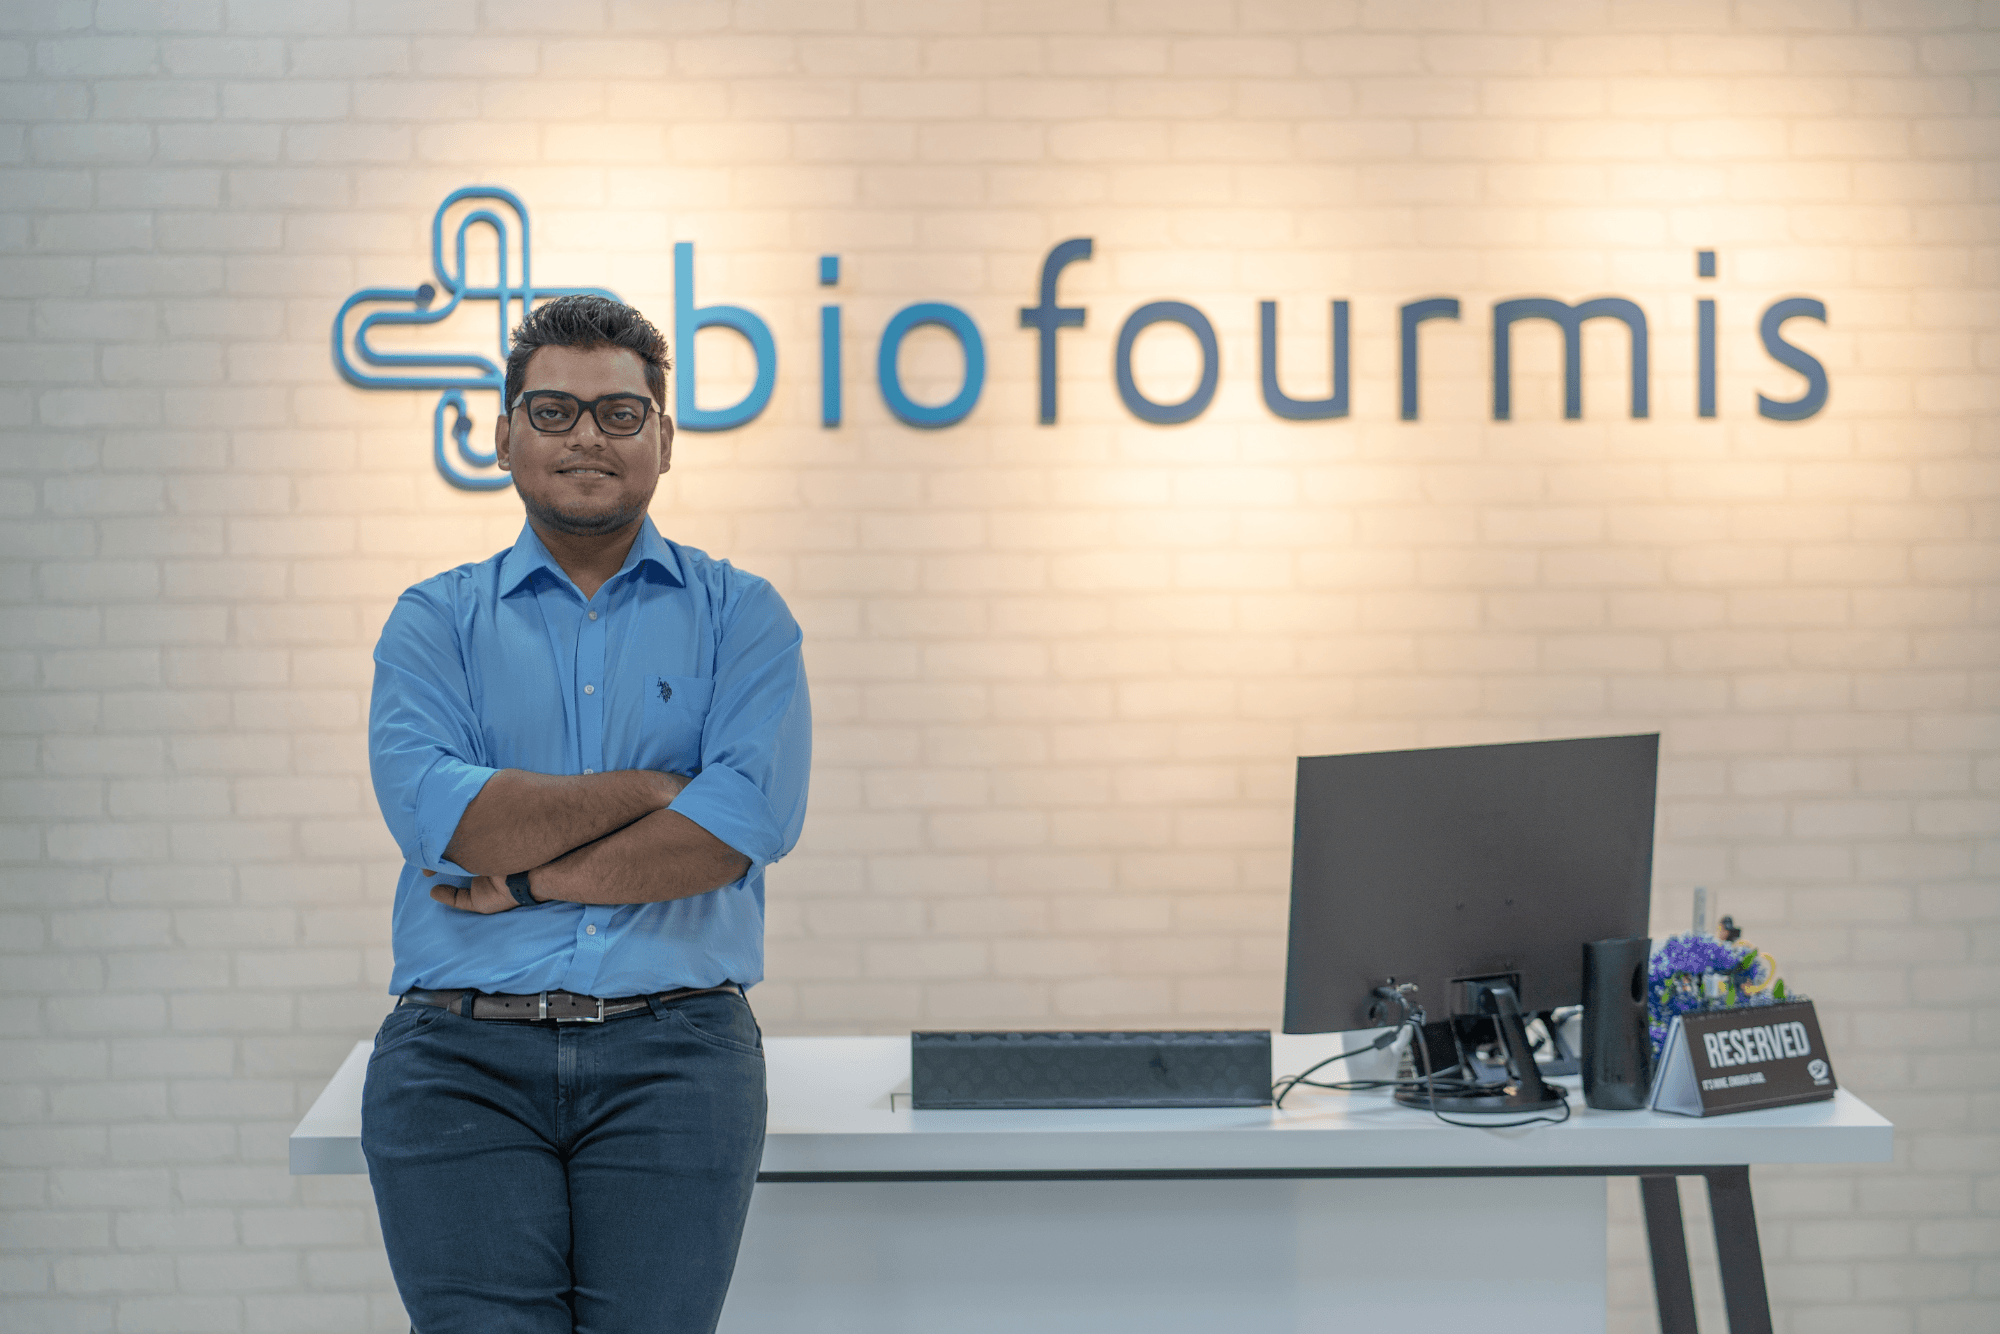 Biofourmis' founder